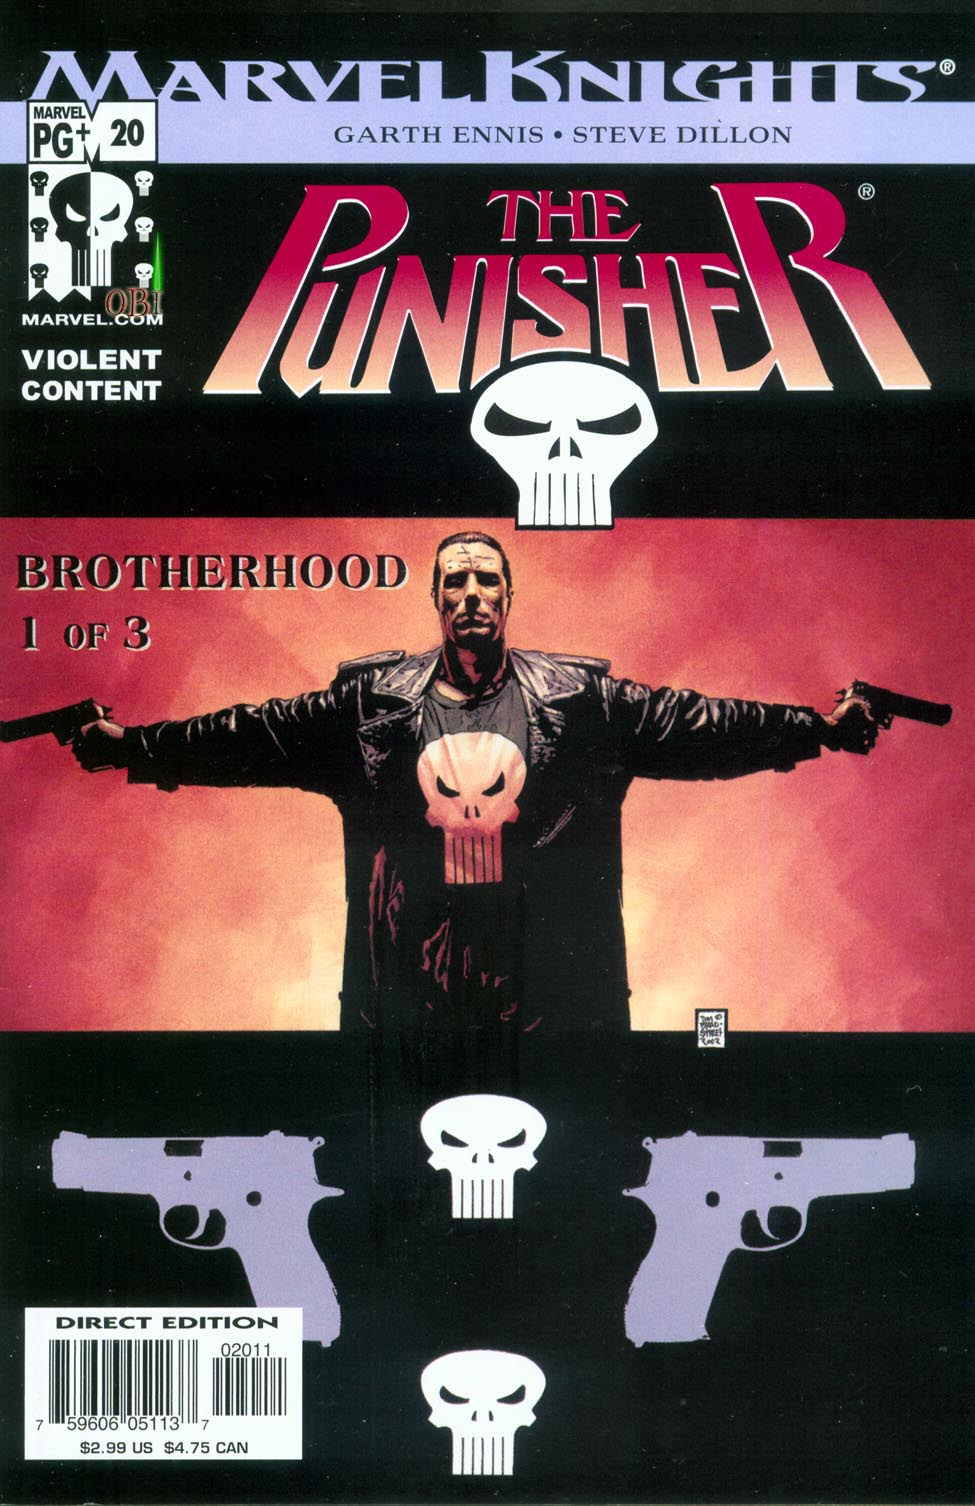 The Punisher (2001) Issue #20 - Brotherhood #01 #20 - English 1